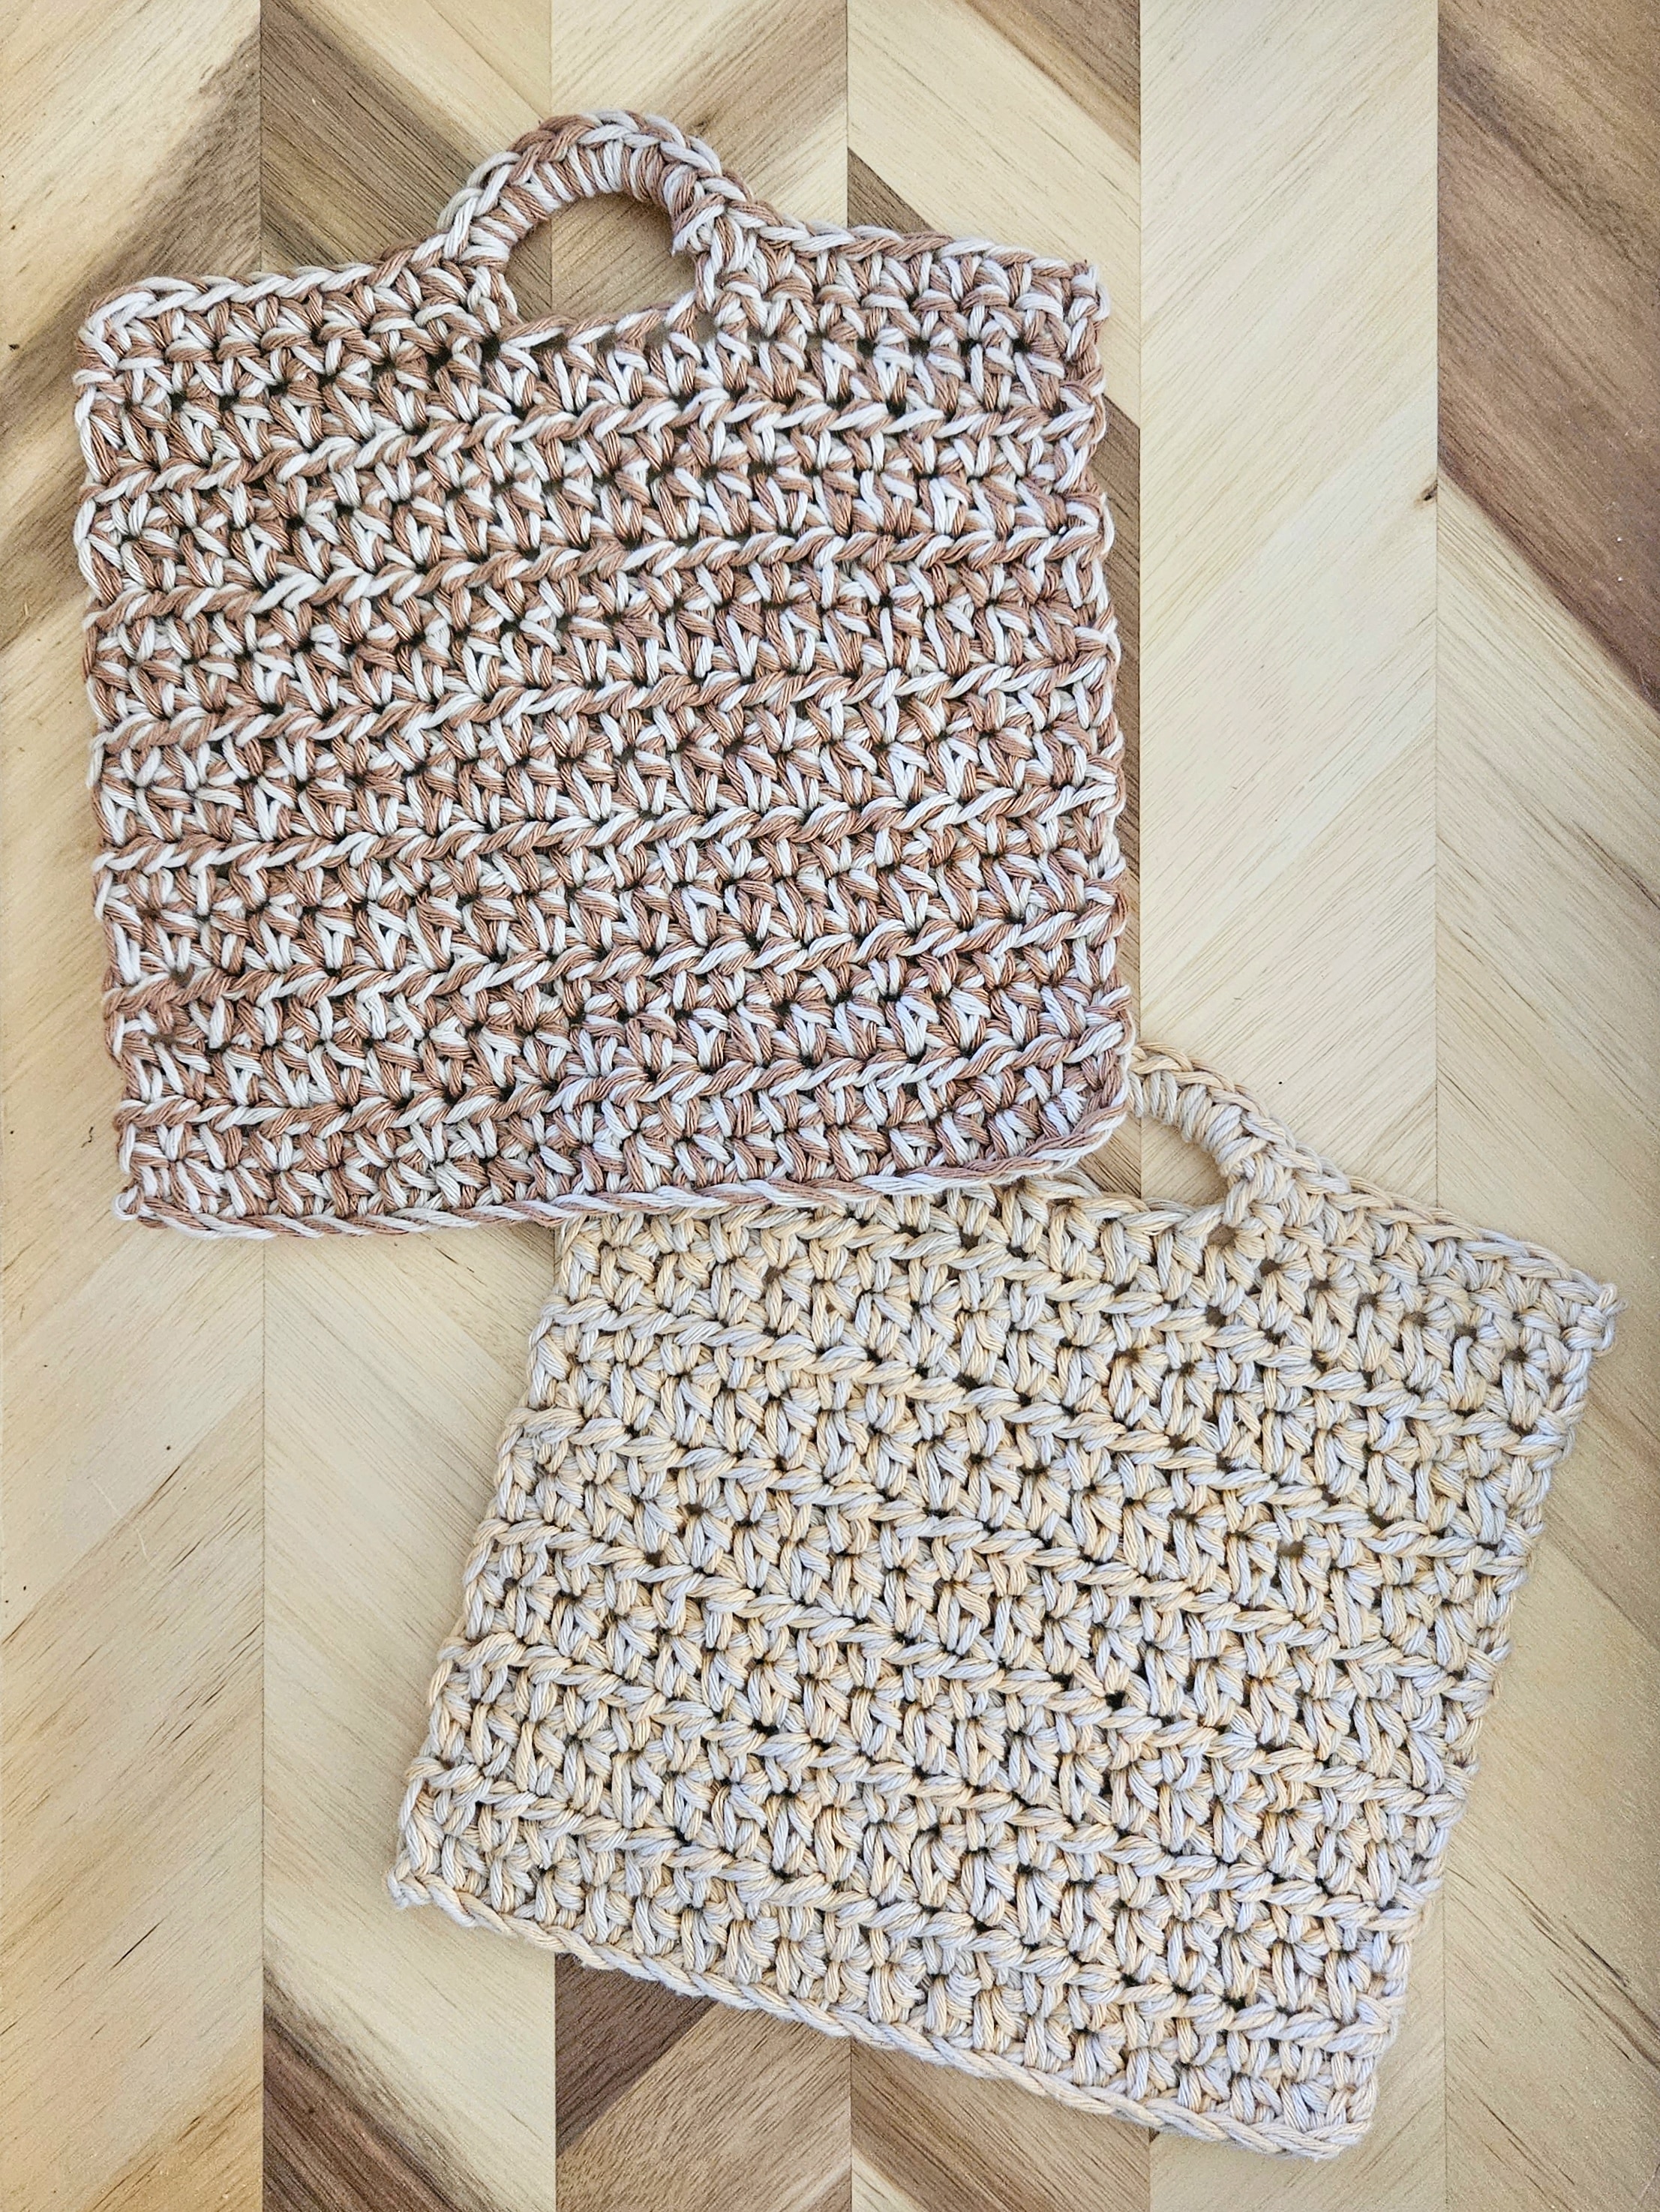 free crochet hotpad pattern